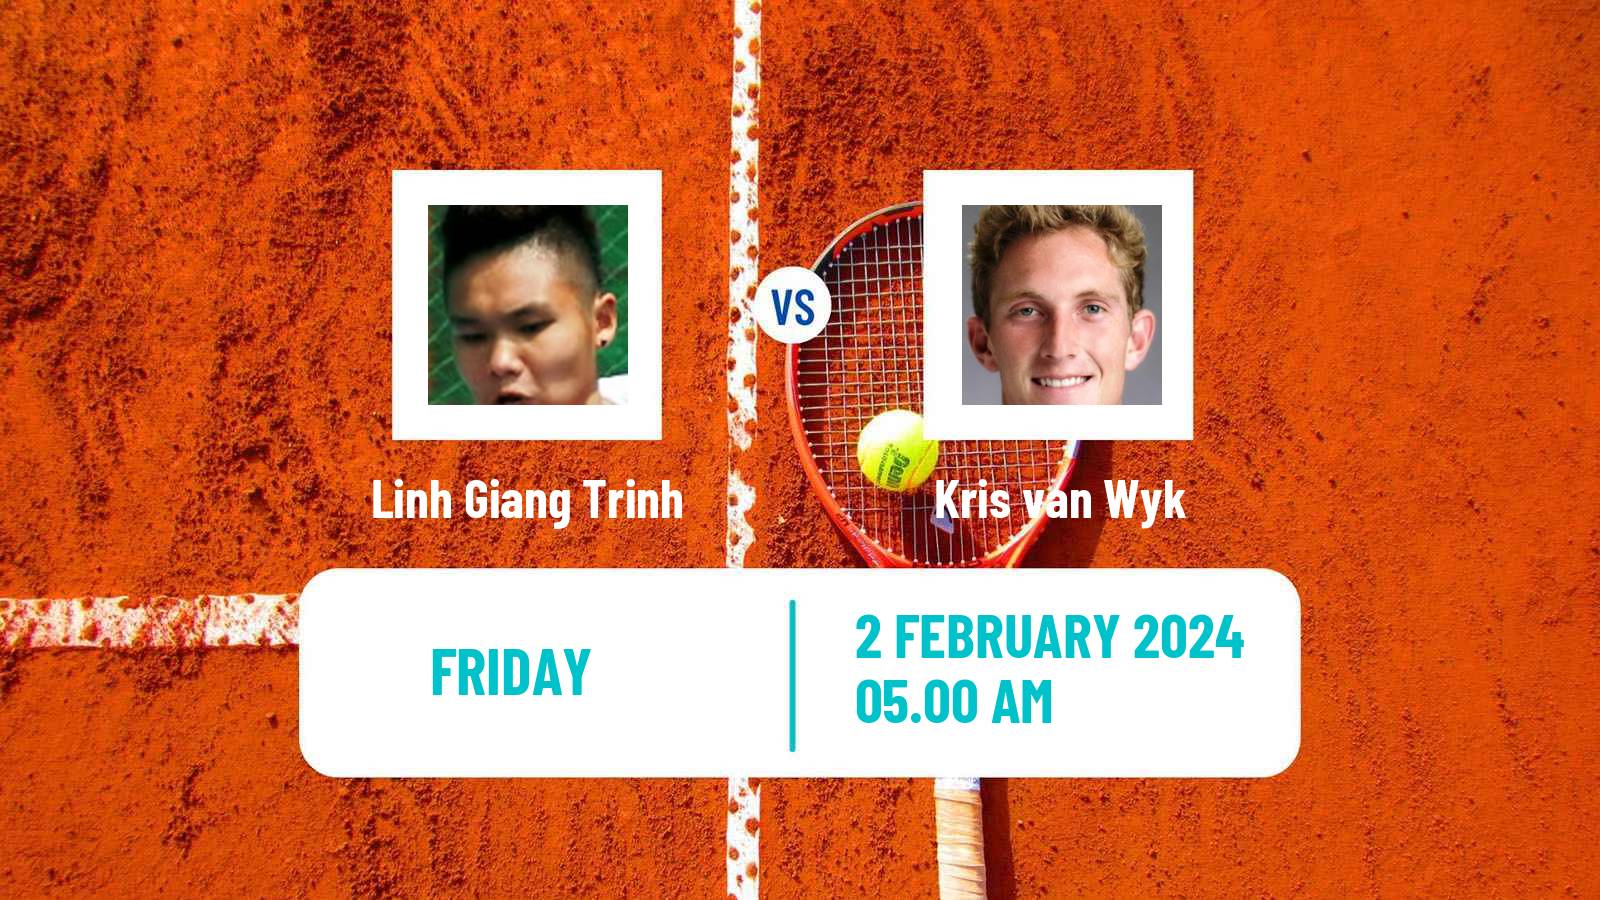 Tennis Davis Cup World Group II Linh Giang Trinh - Kris van Wyk